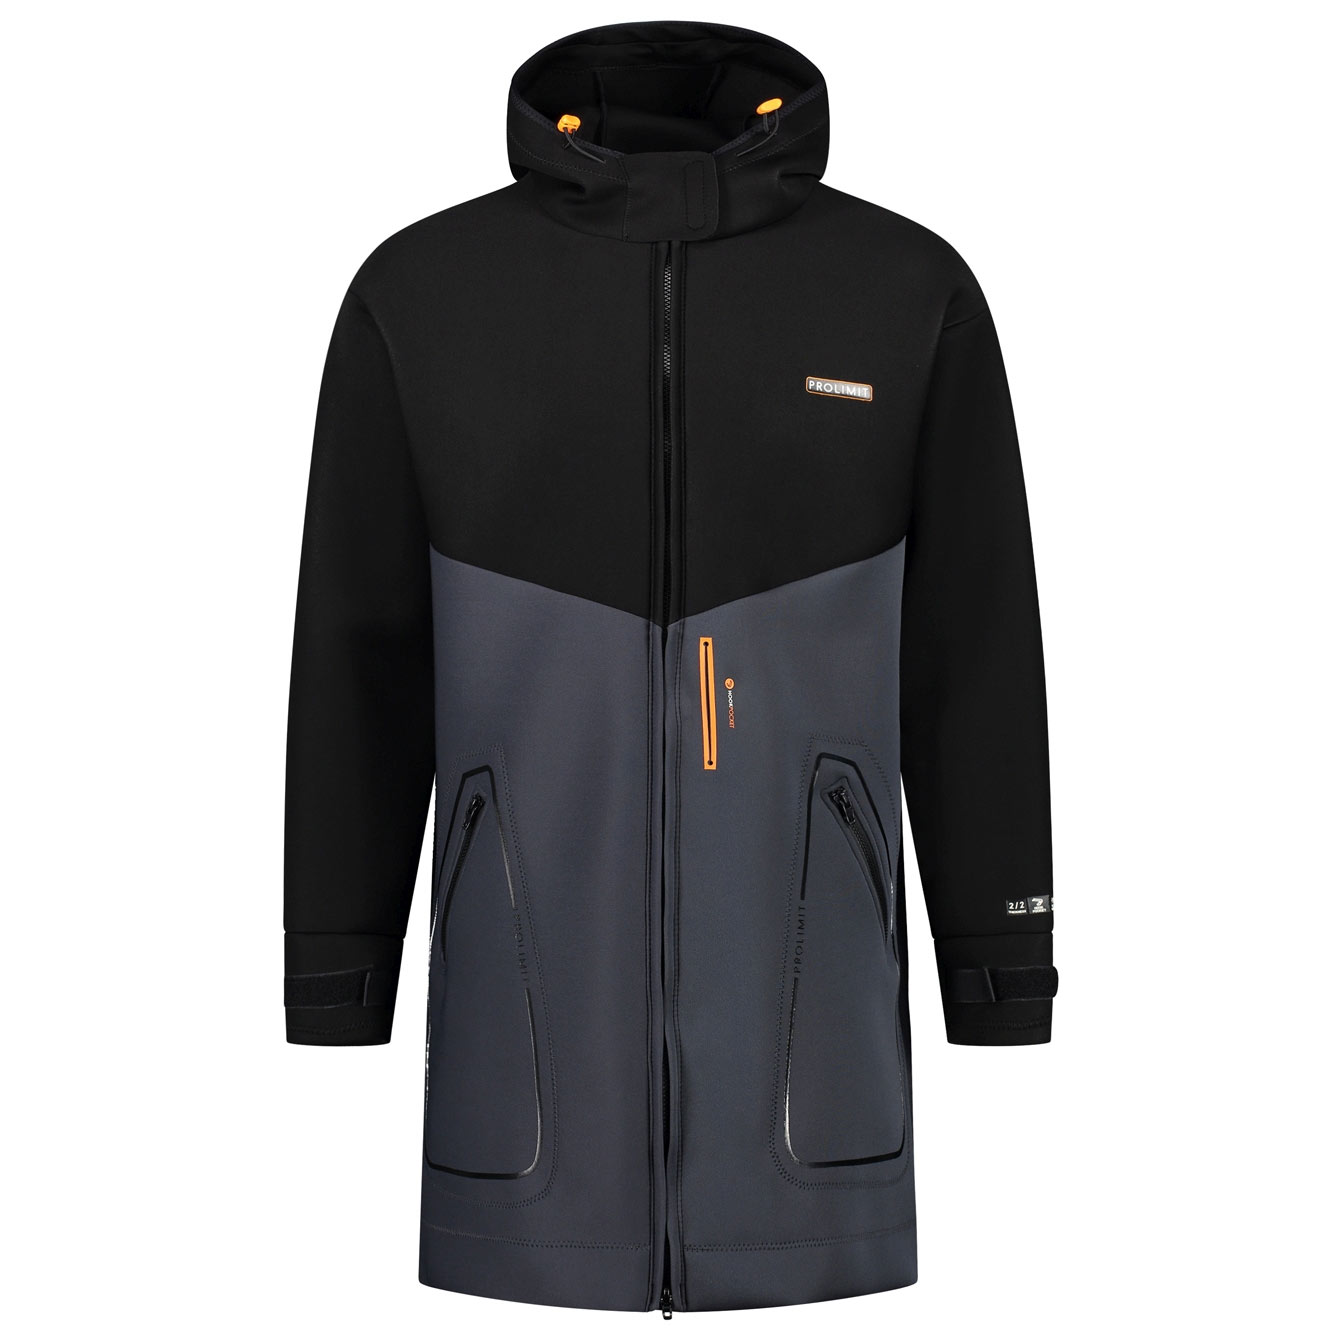 Grey/Black/Wine Prolimit Womens Pure Racer Oxygen Wetsuit Jacket 05041 